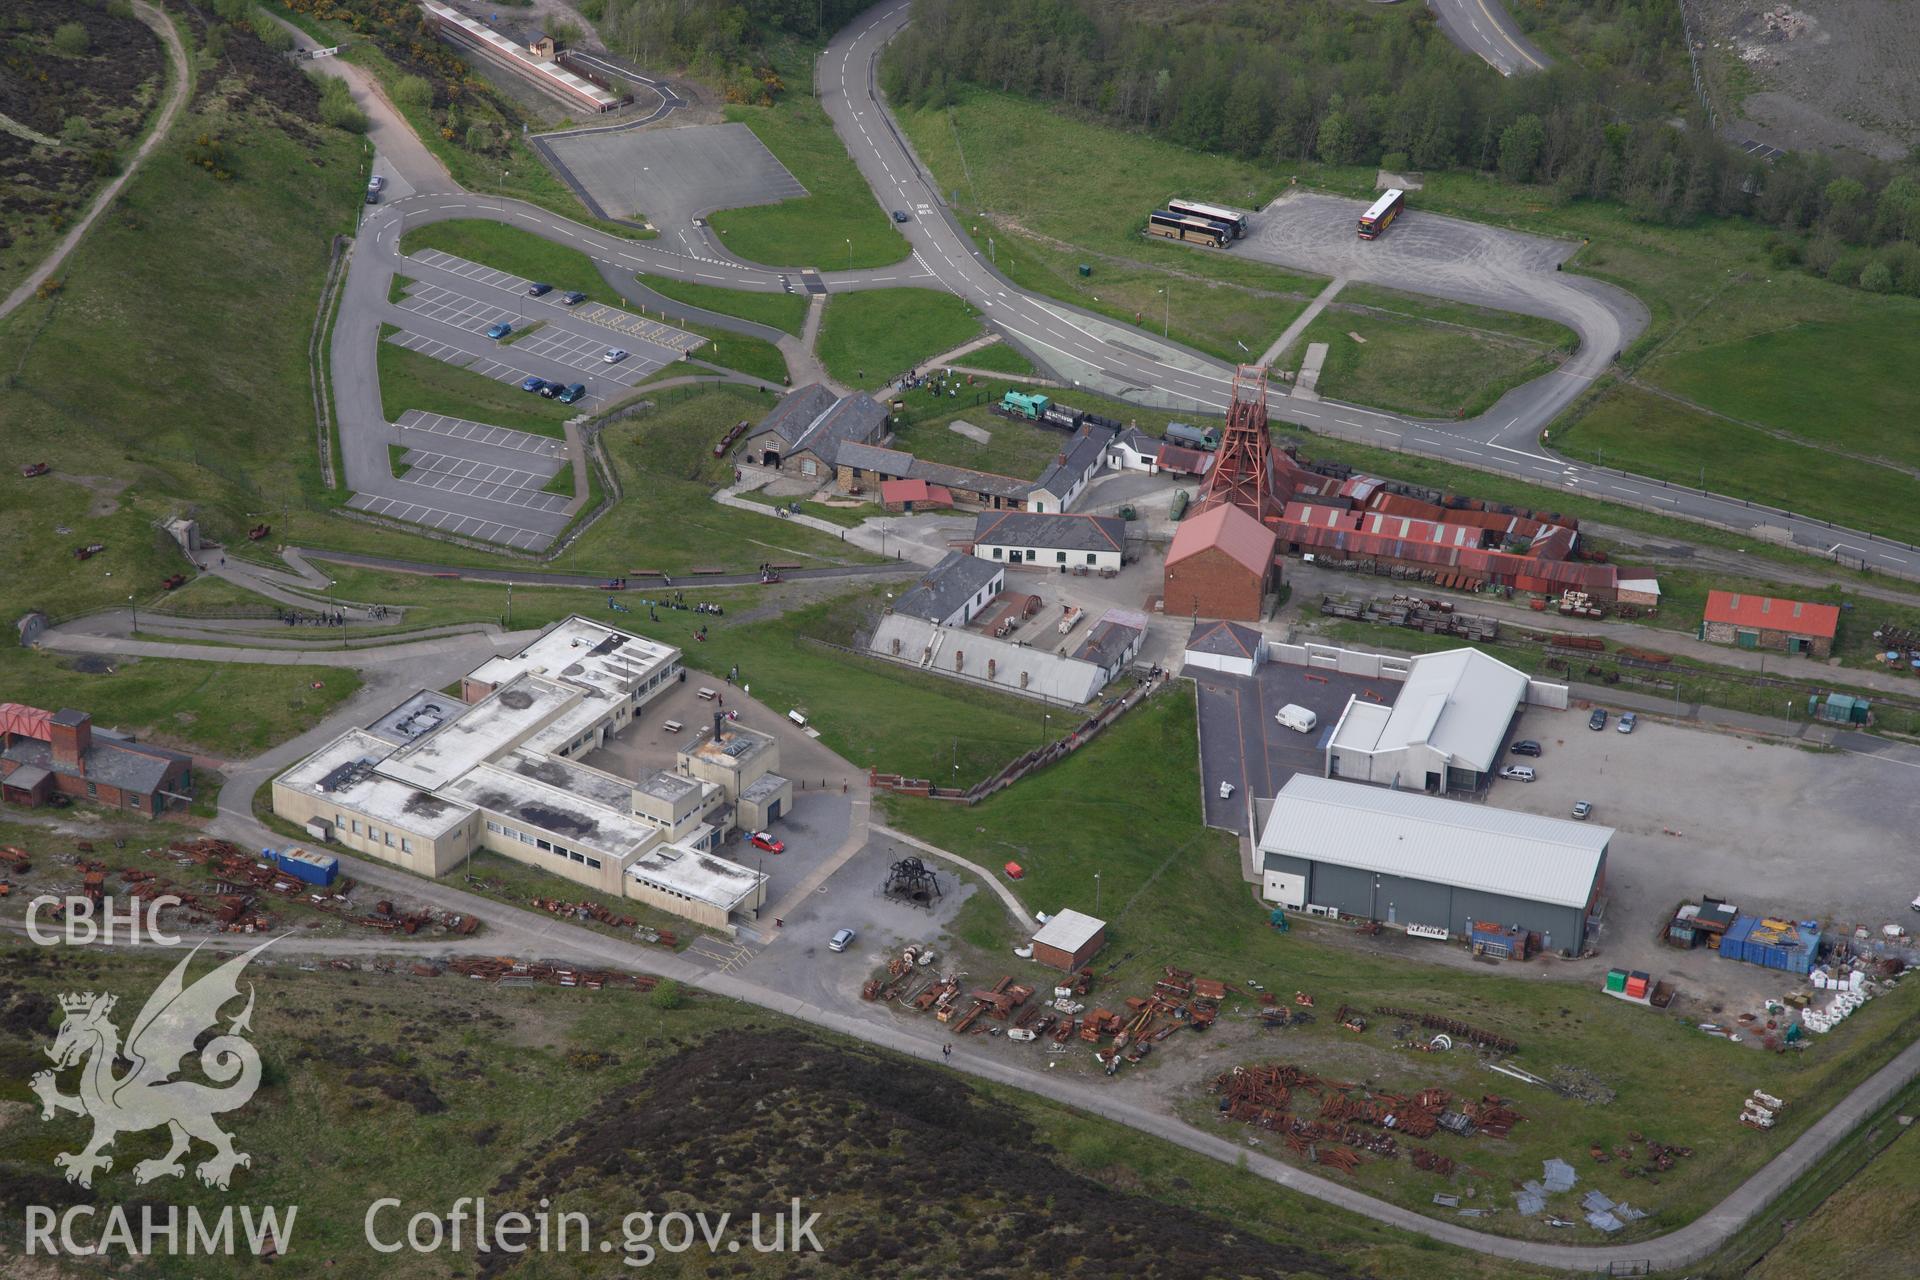 RCAHMW colour oblique photograph of Big Pit Coal Mine. Taken by Toby Driver on 22/05/2012.